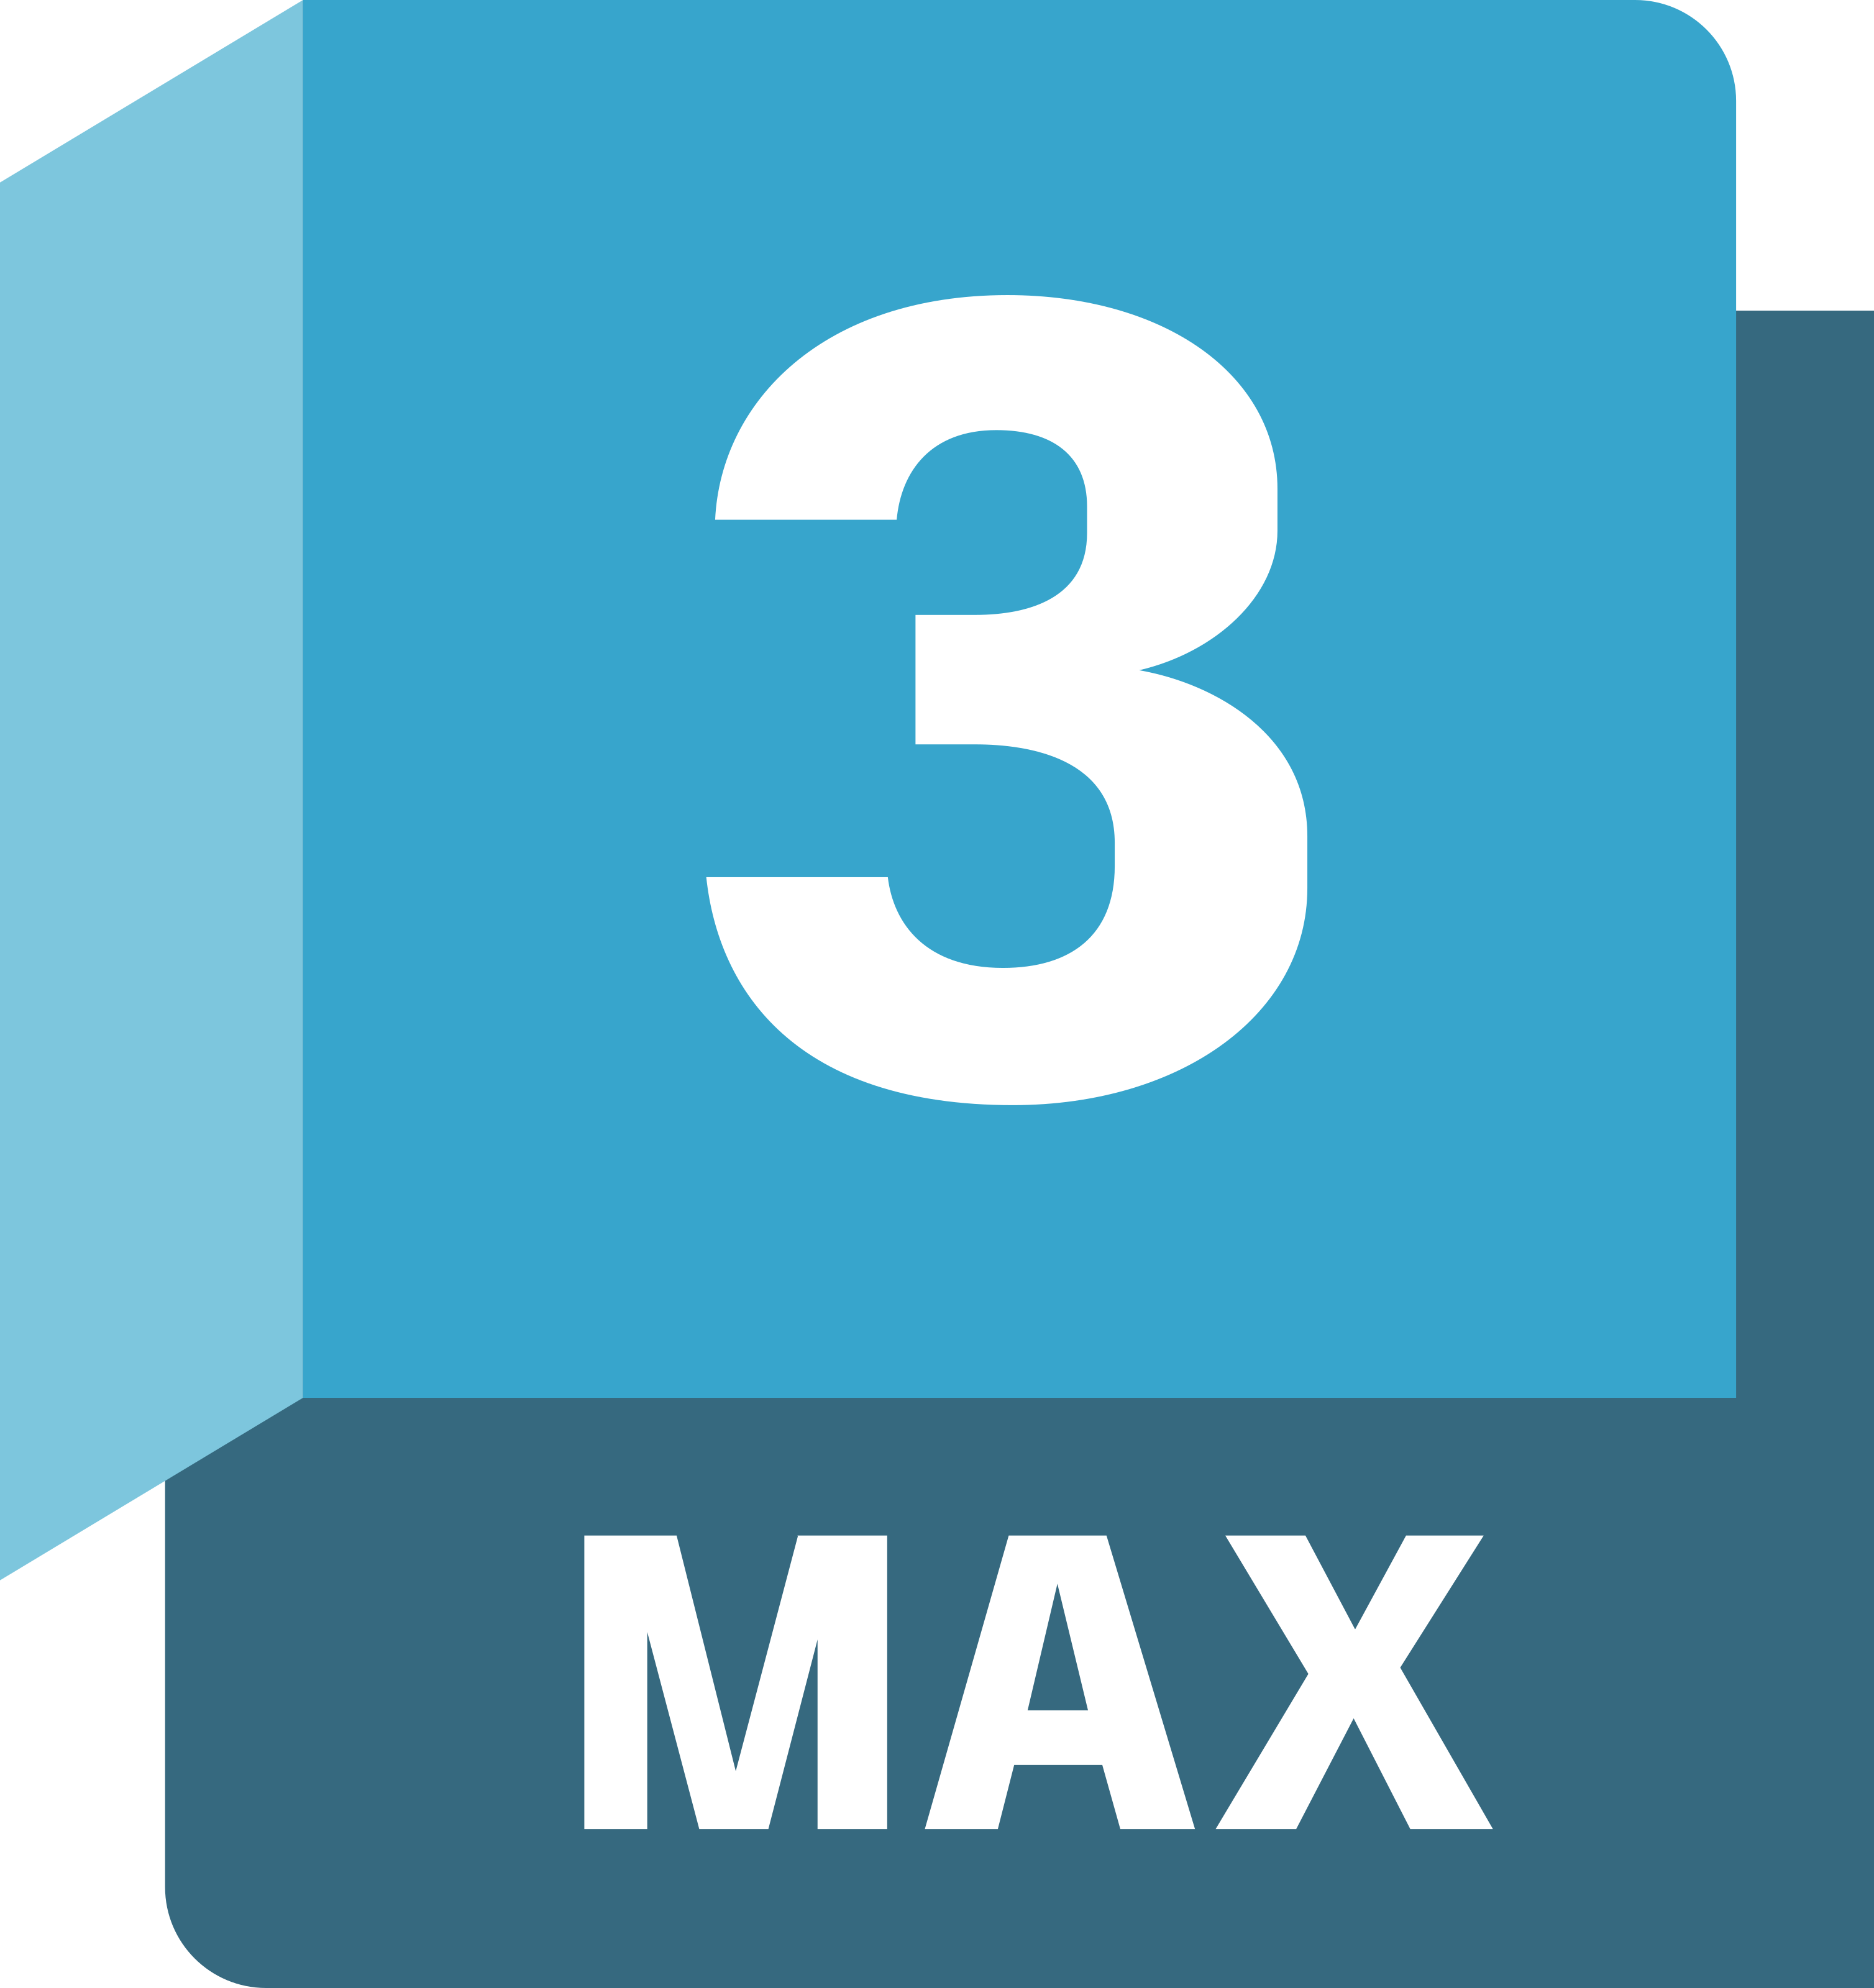 Icons 2023. 3ds Max 2023. Autodesk 3ds Max 2023. 3ds Max 2023 icon. Логотип 3ds Max 2023.